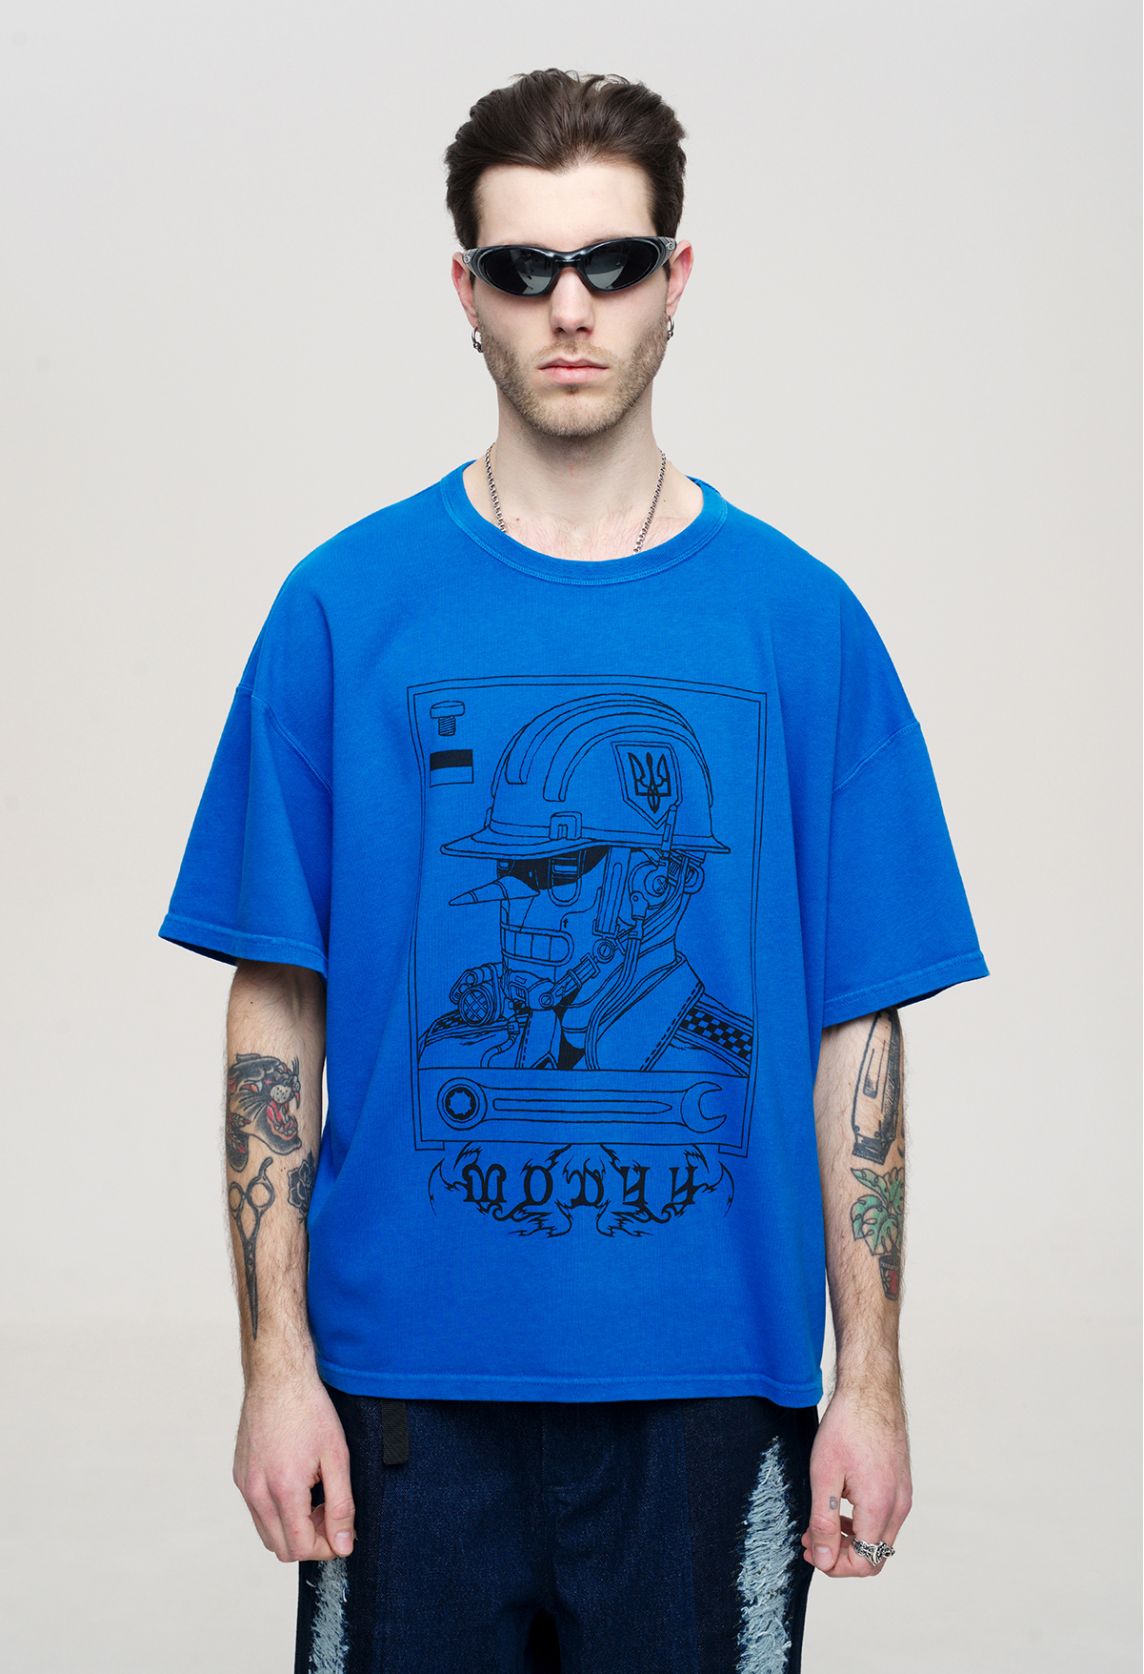 M0D44 x Johnny Terror Labor V2 T-Shirt Oversize